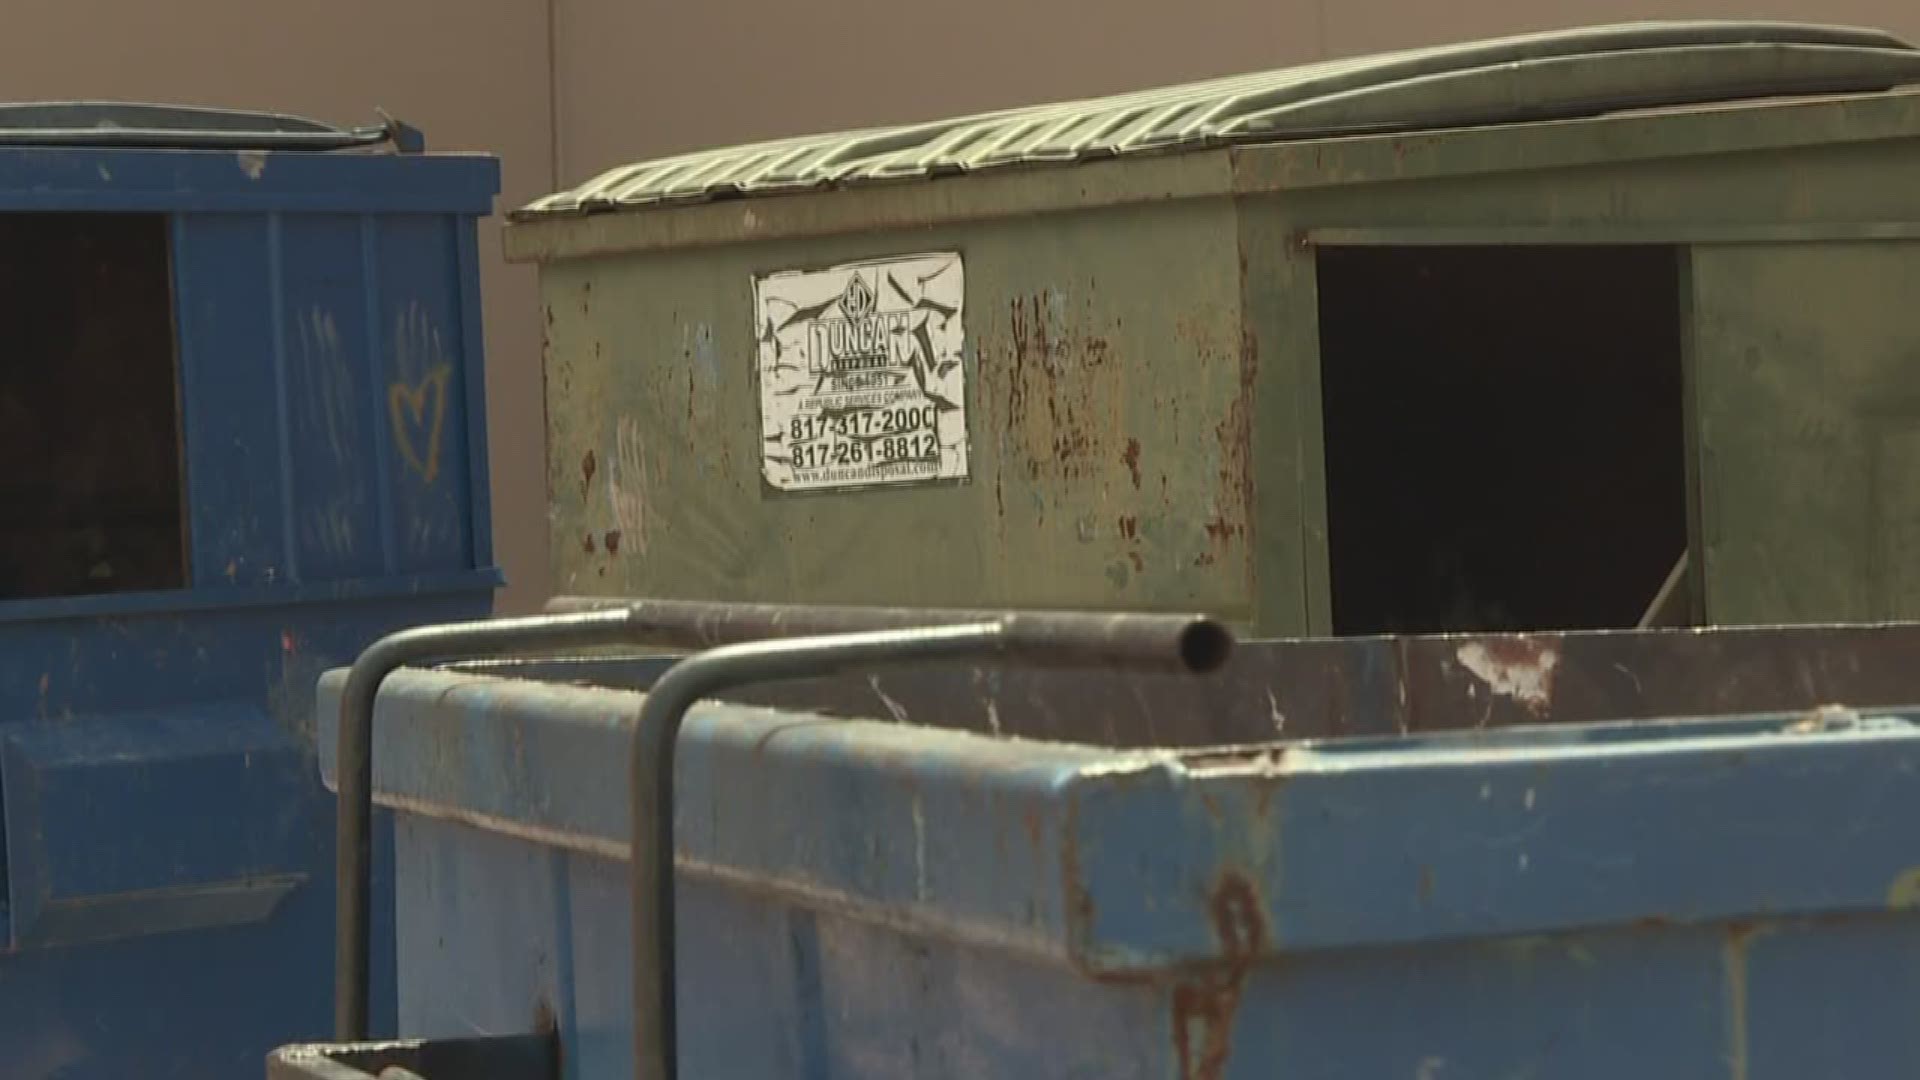 Verify: Dumpster diving for makeup at Ulta?